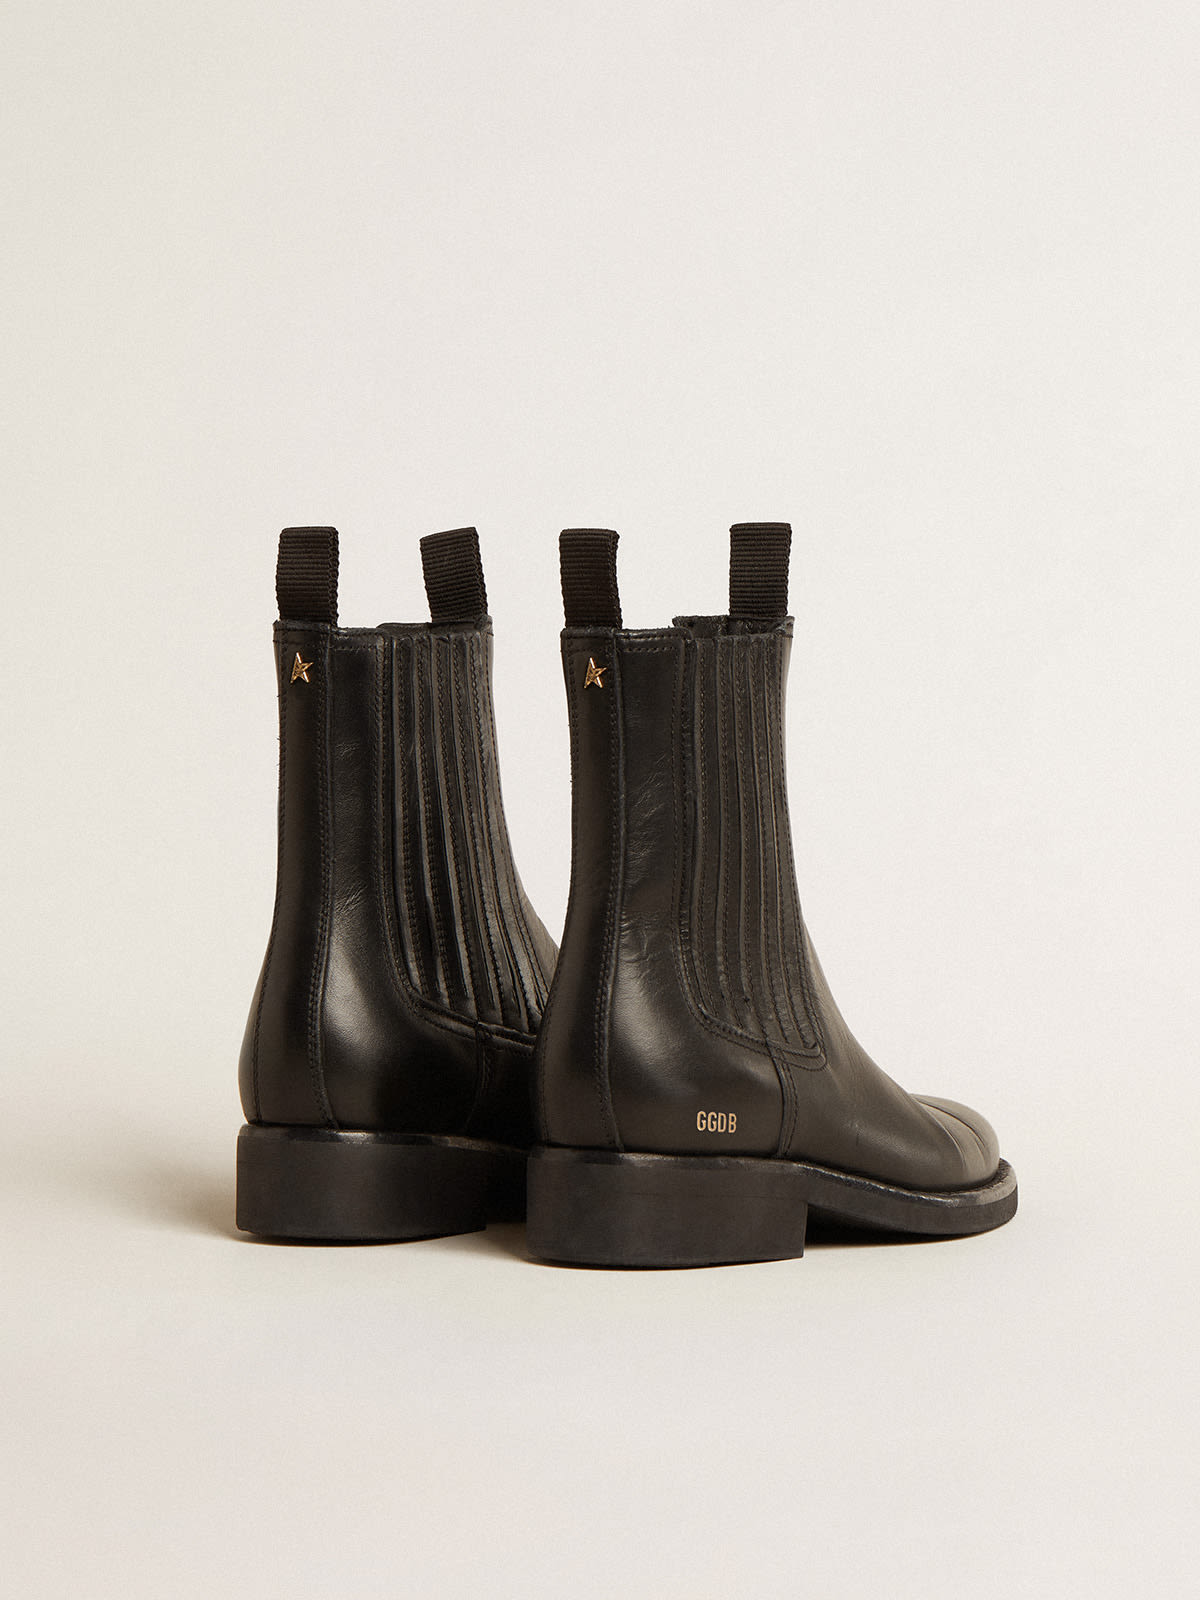 Golden Goose - Women’s Chelsea boots in black leather in 